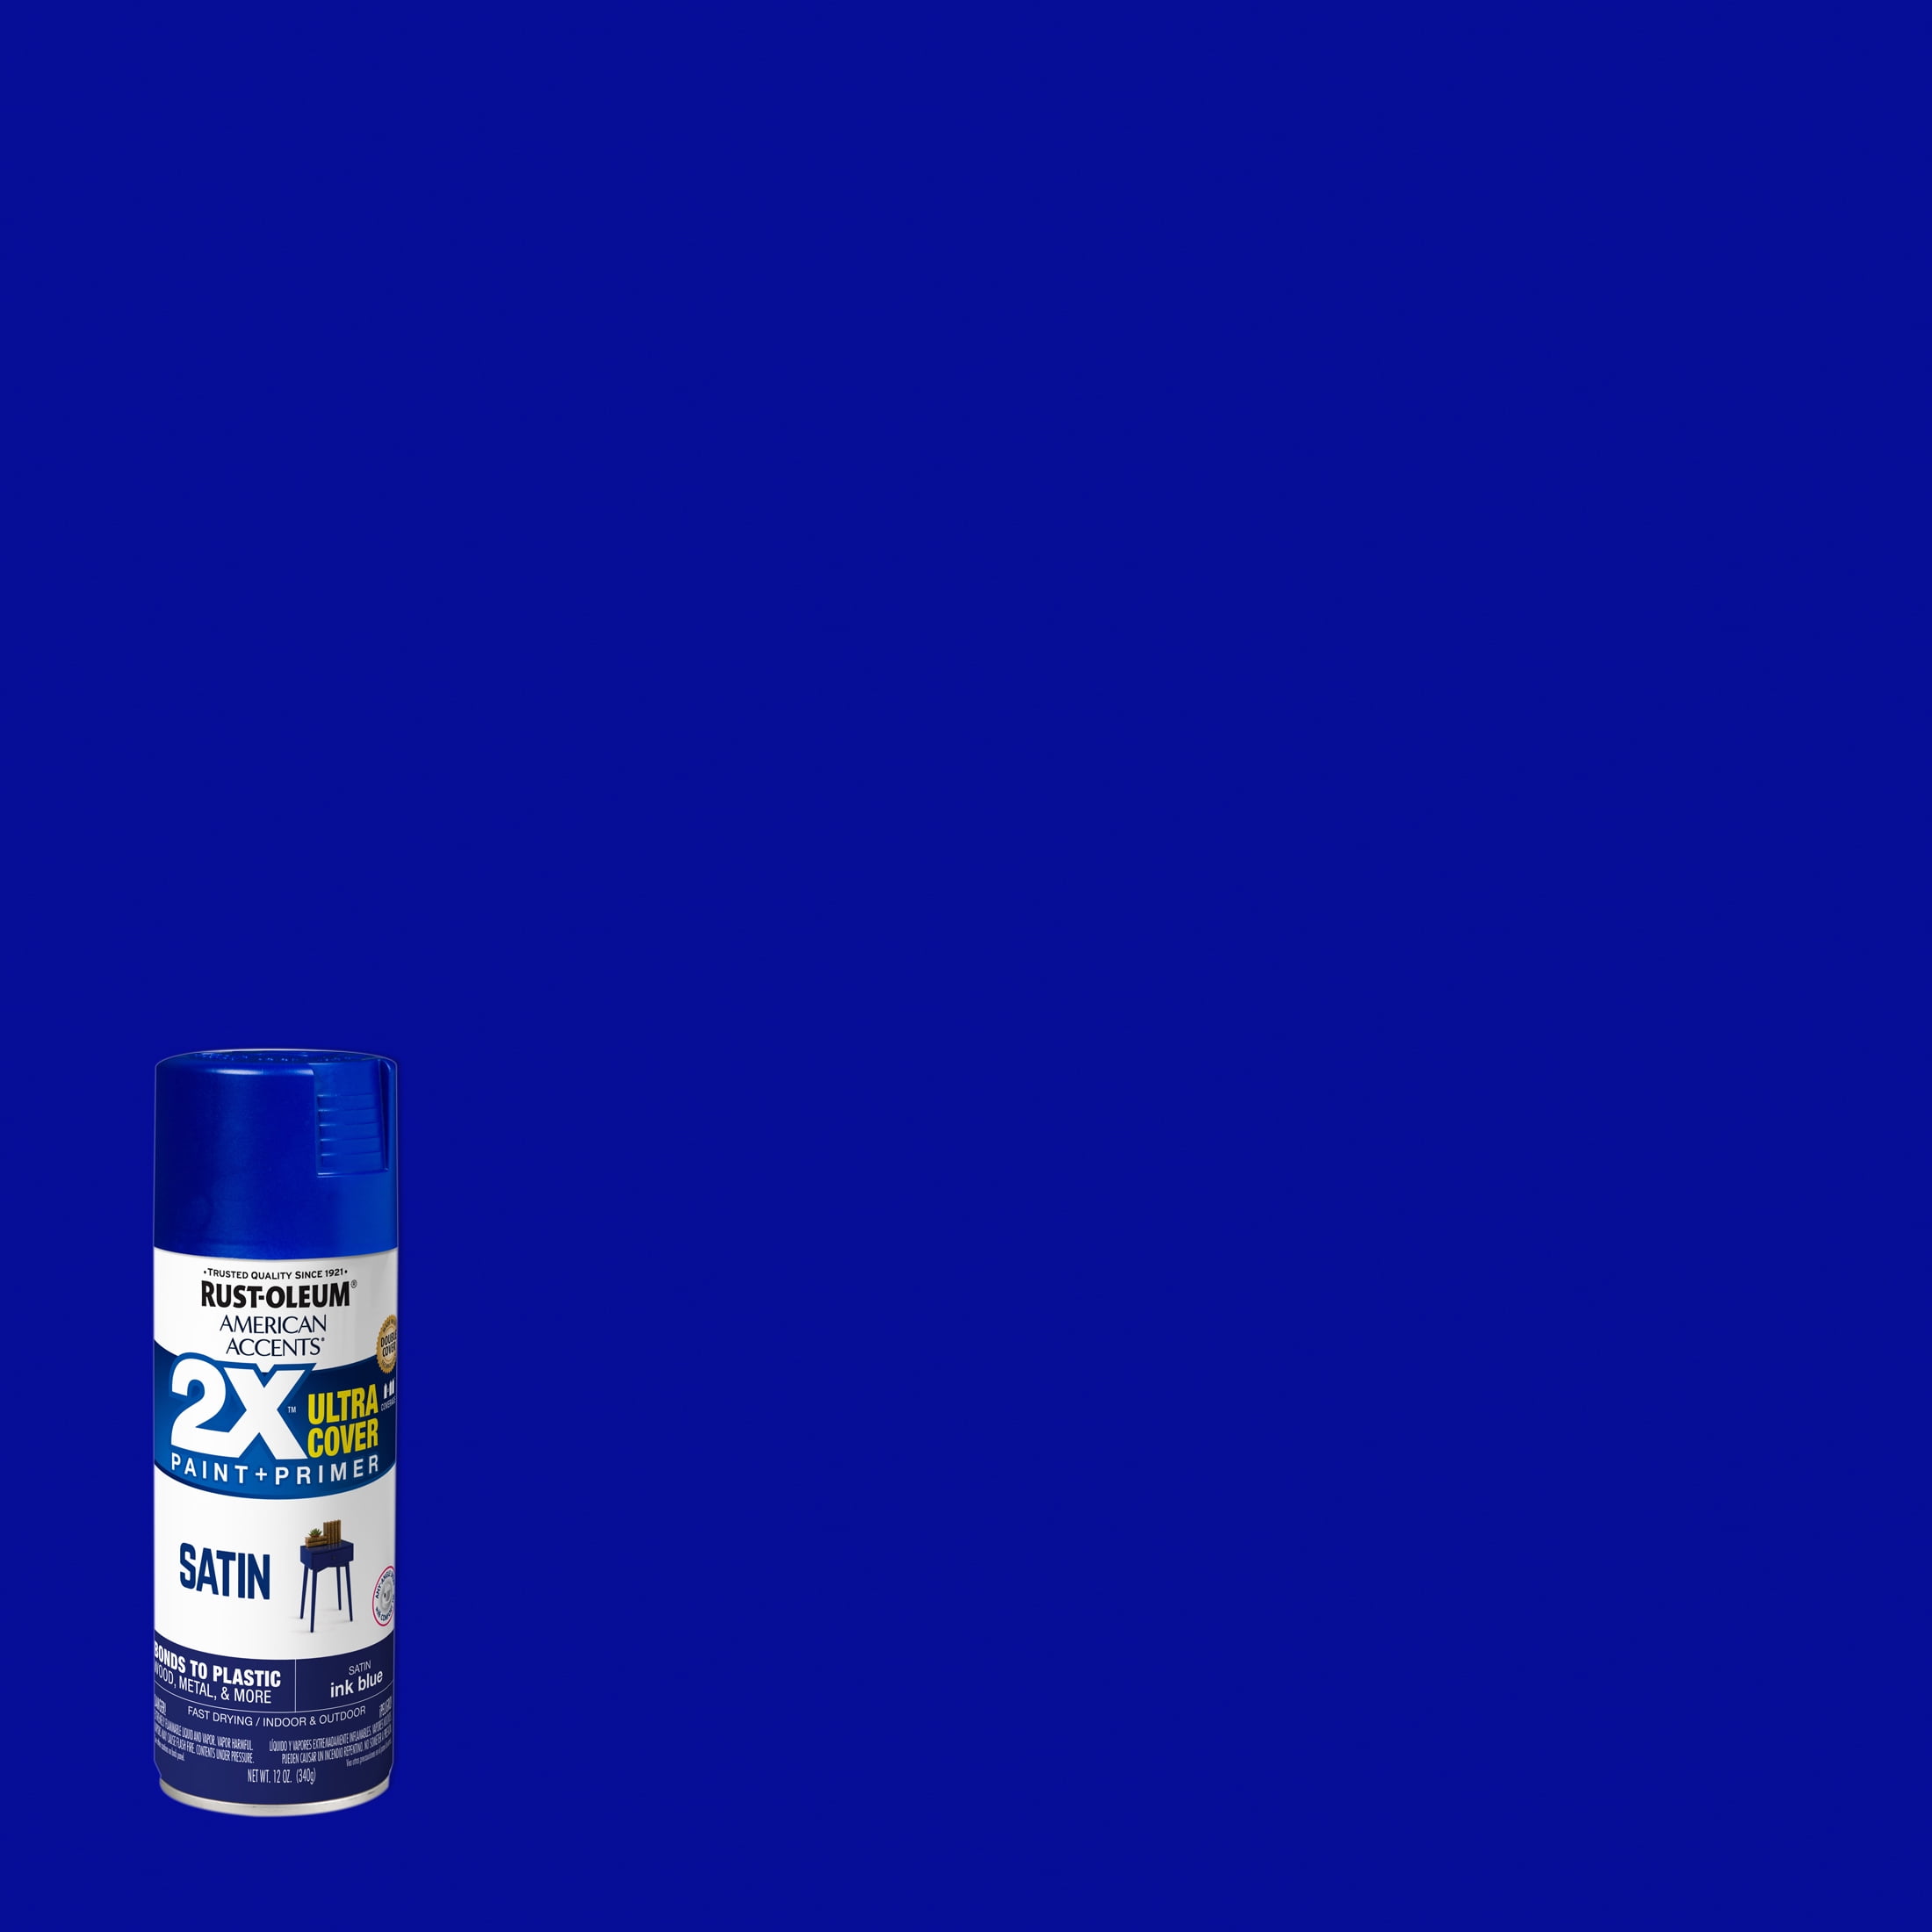 Tru-Color 4029 Railroad Color Acrylic Light Blue 4.5 oz. Spray